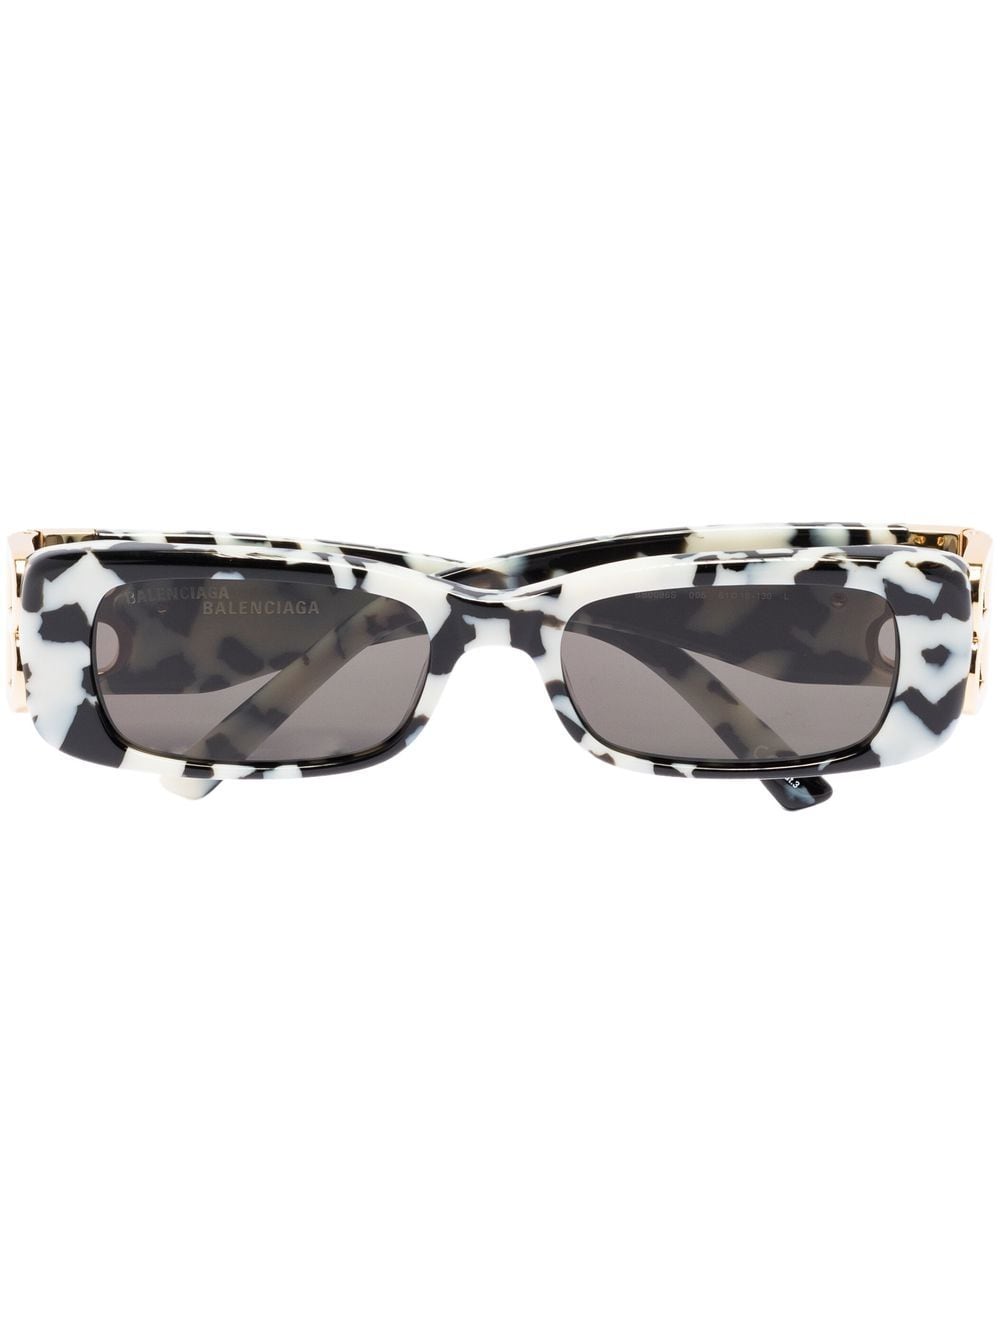 Dynasty rectangular-frame sunglasses